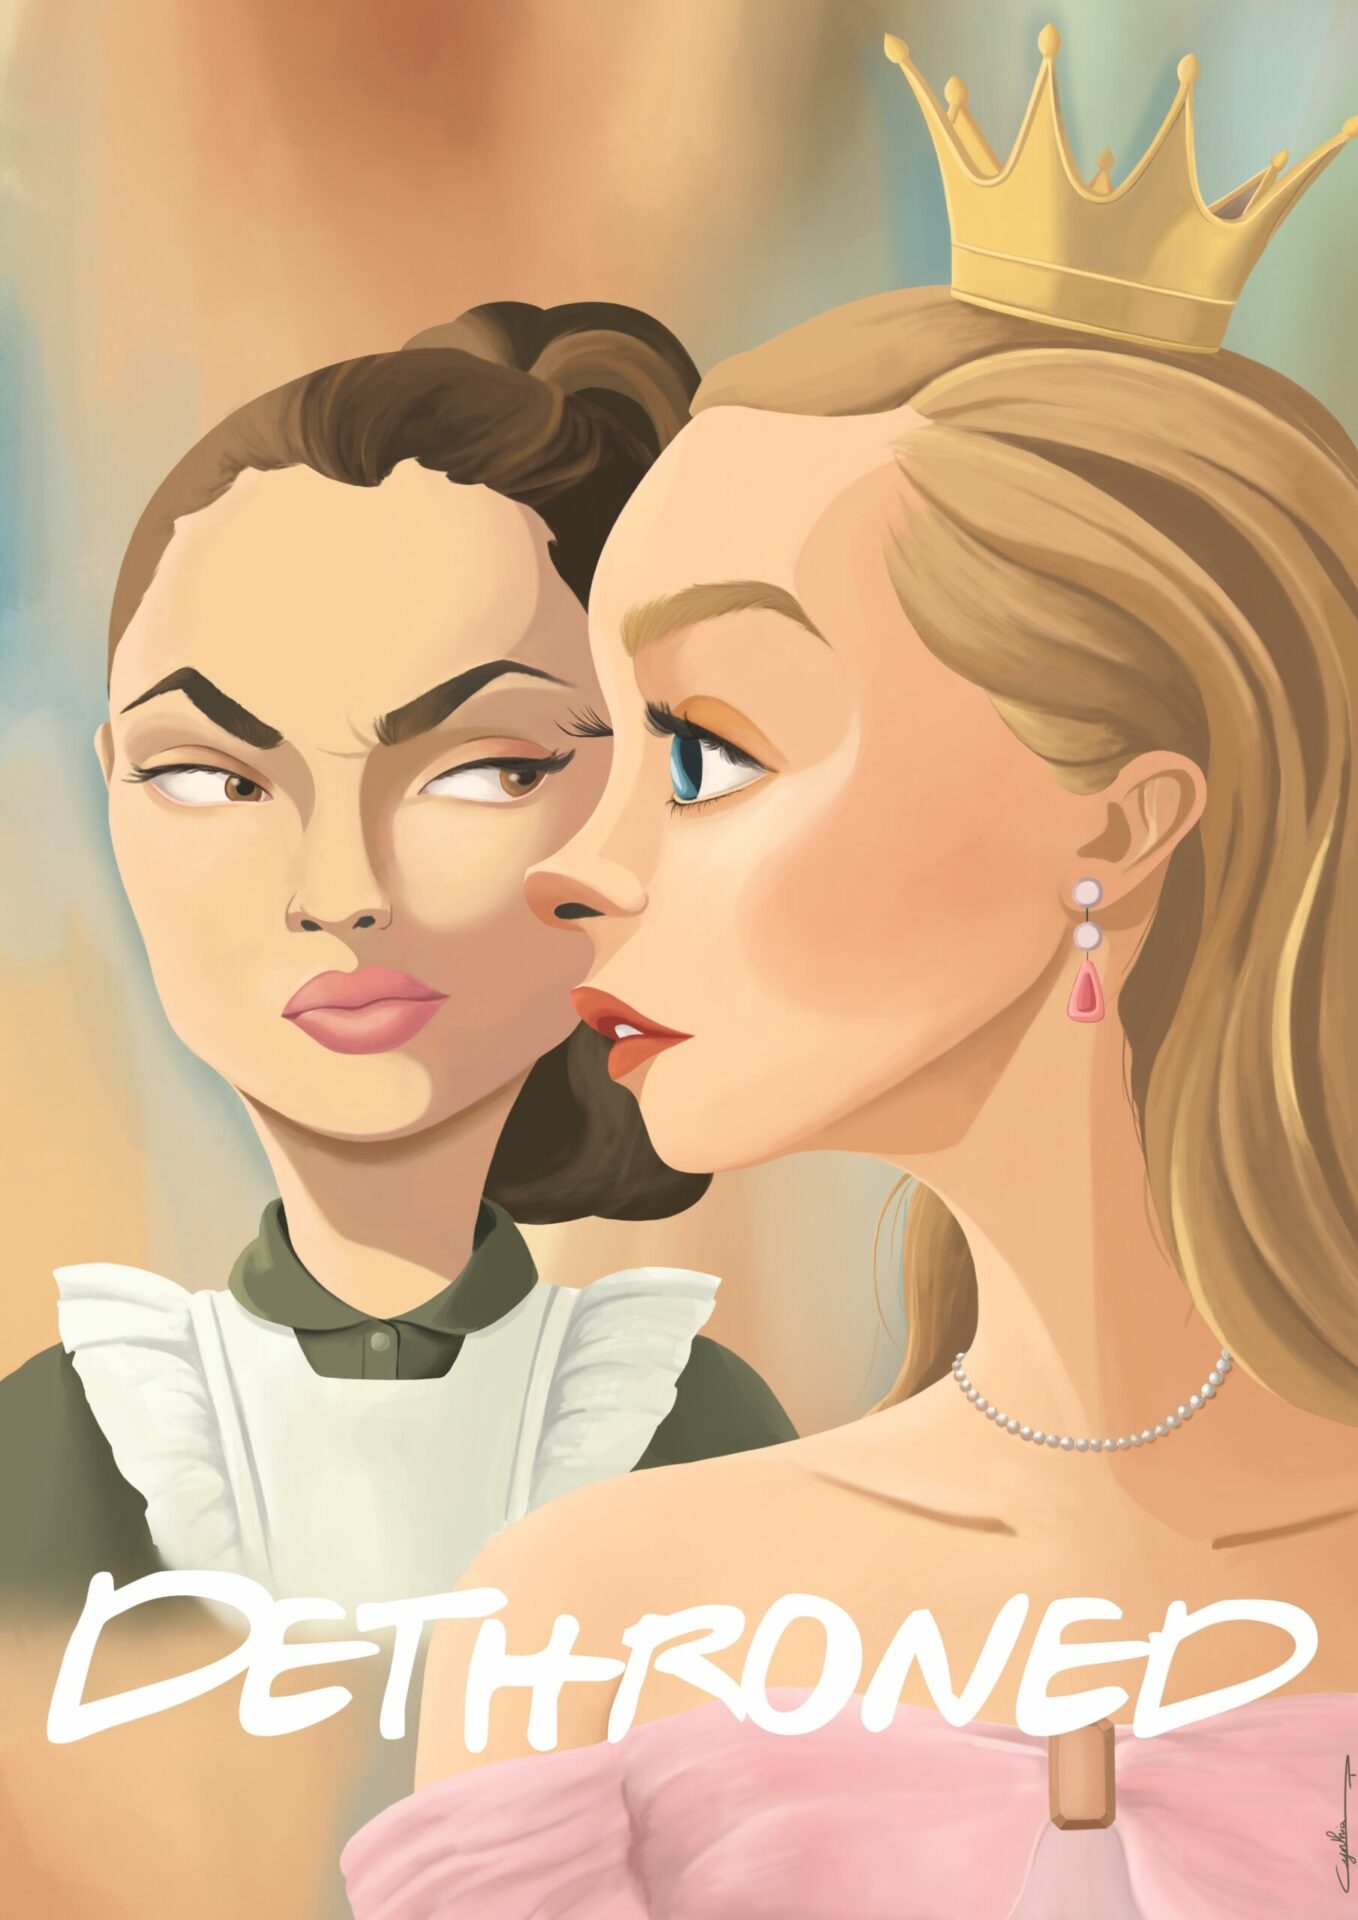 Teen book cover illustration by Cynthia Artstudio